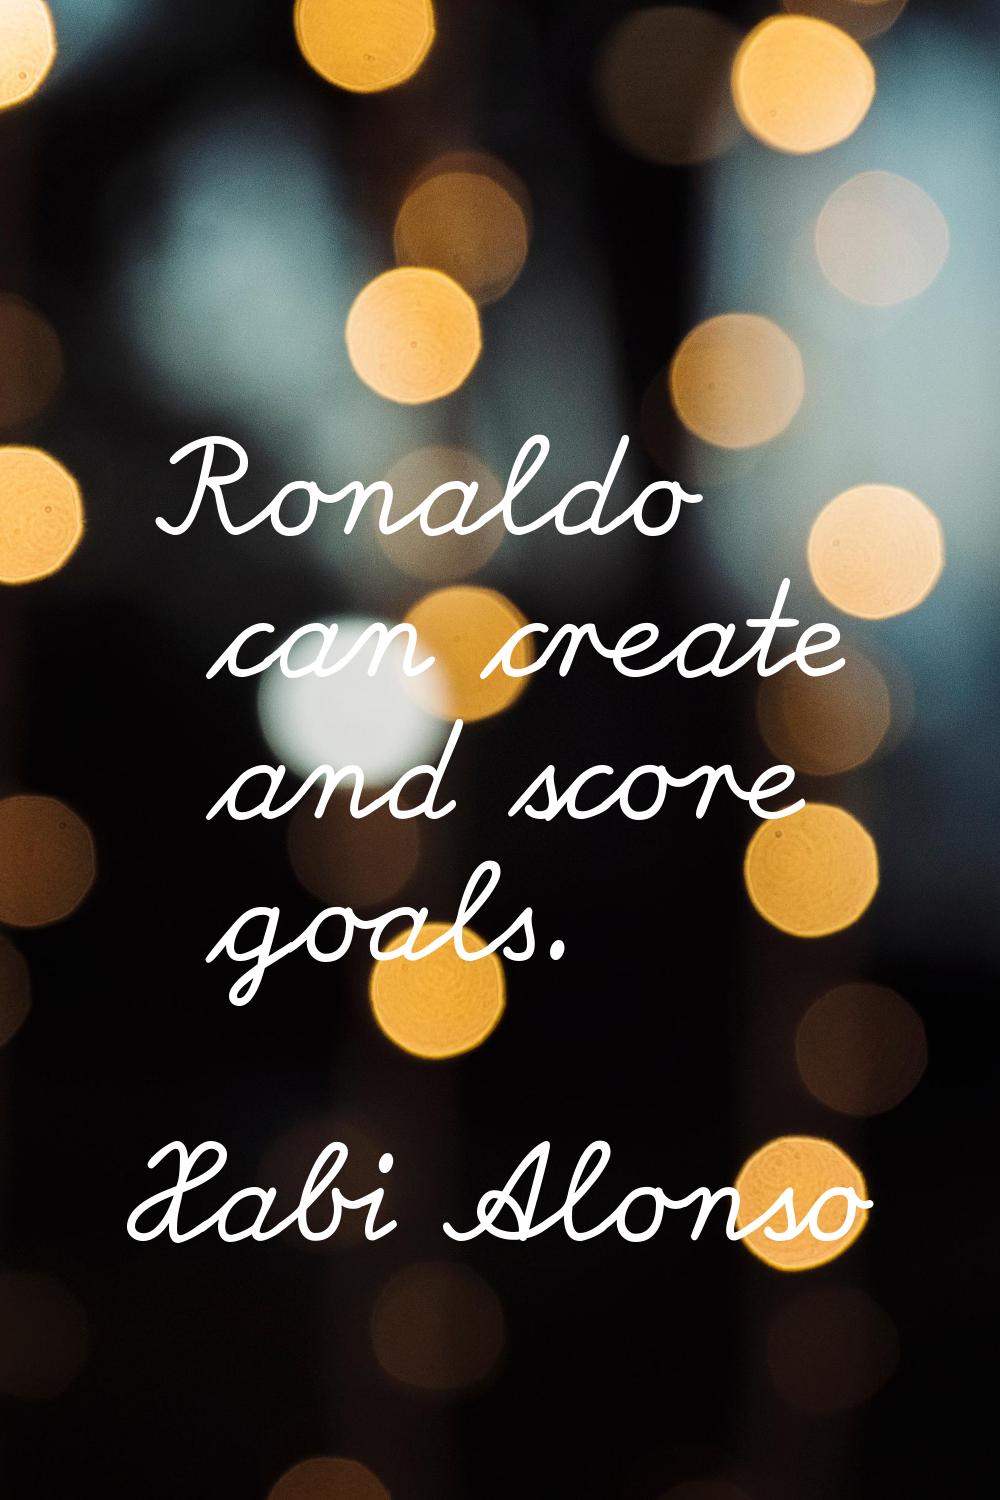 Ronaldo can create and score goals.